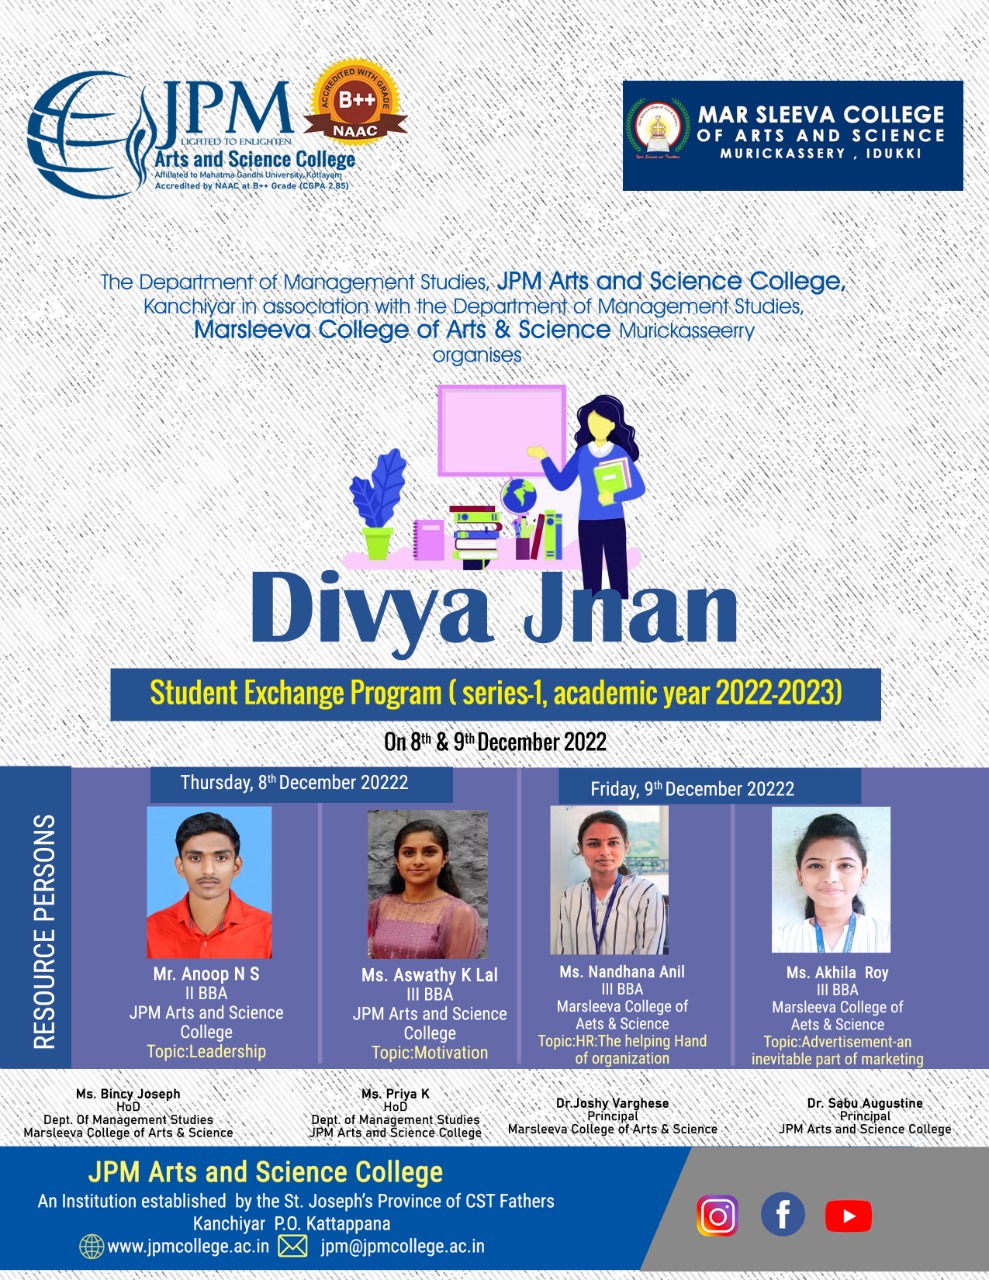 Divya Jnan Student Exchange Program Series - I